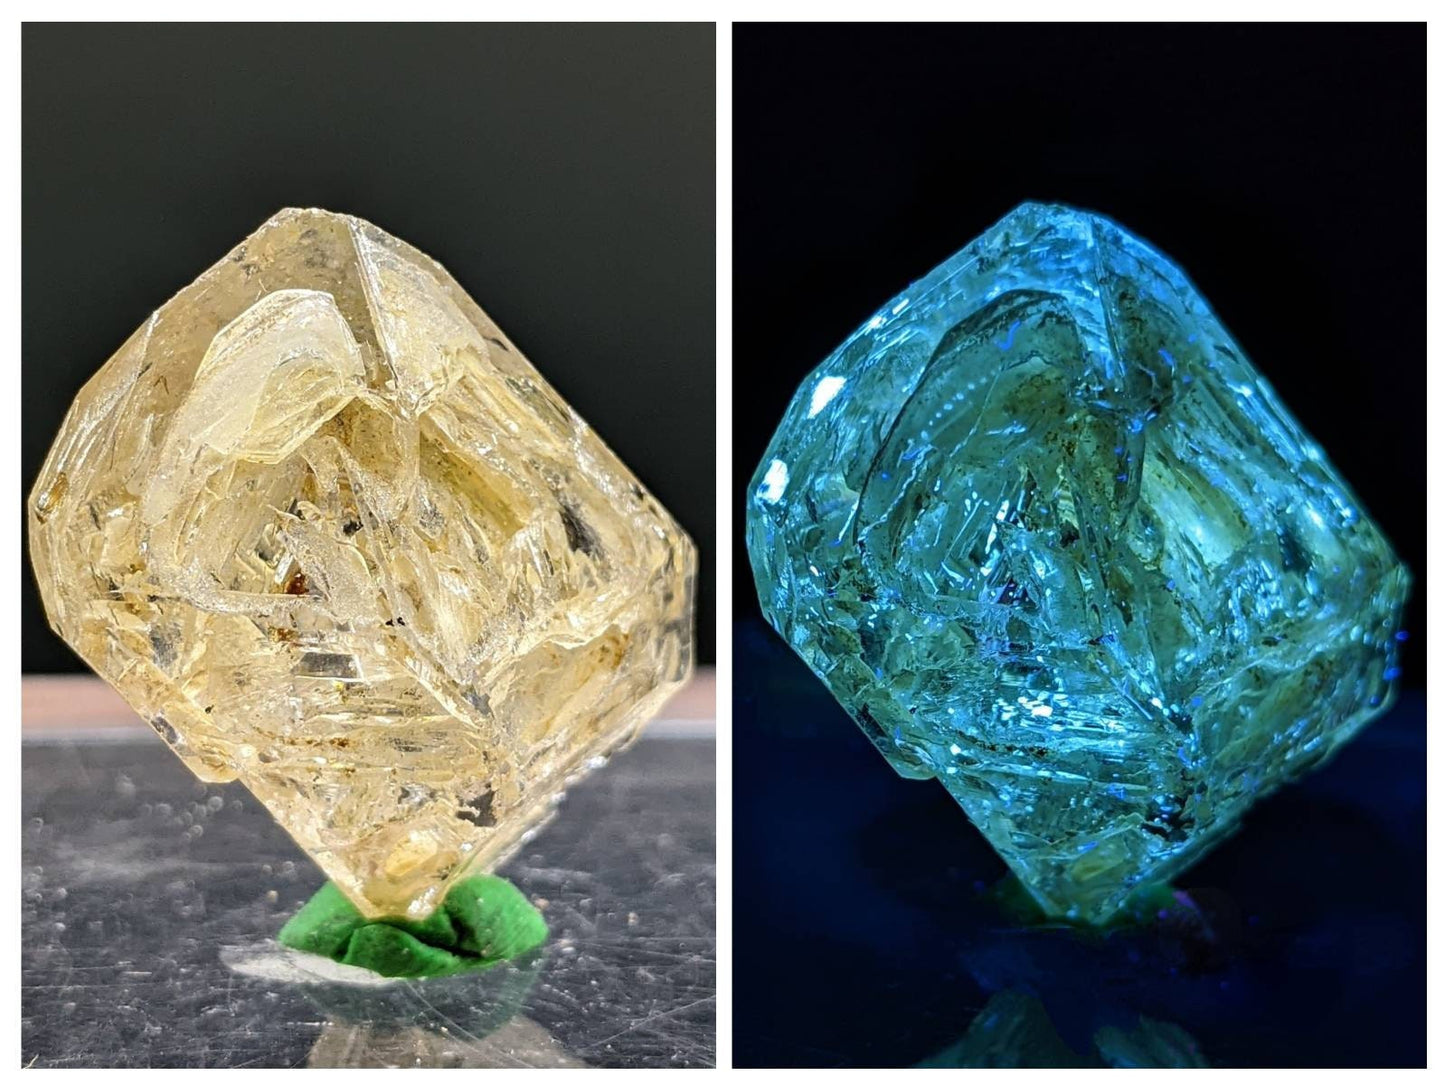 ARSAA GEMS AND MINERALSAesthetic fine quality beautiful UV reactive petroleum quartz crystal from Balochistan Pakistan, weight 8.4 grams - Premium  from ARSAA GEMS AND MINERALS - Just $100.00! Shop now at ARSAA GEMS AND MINERALS